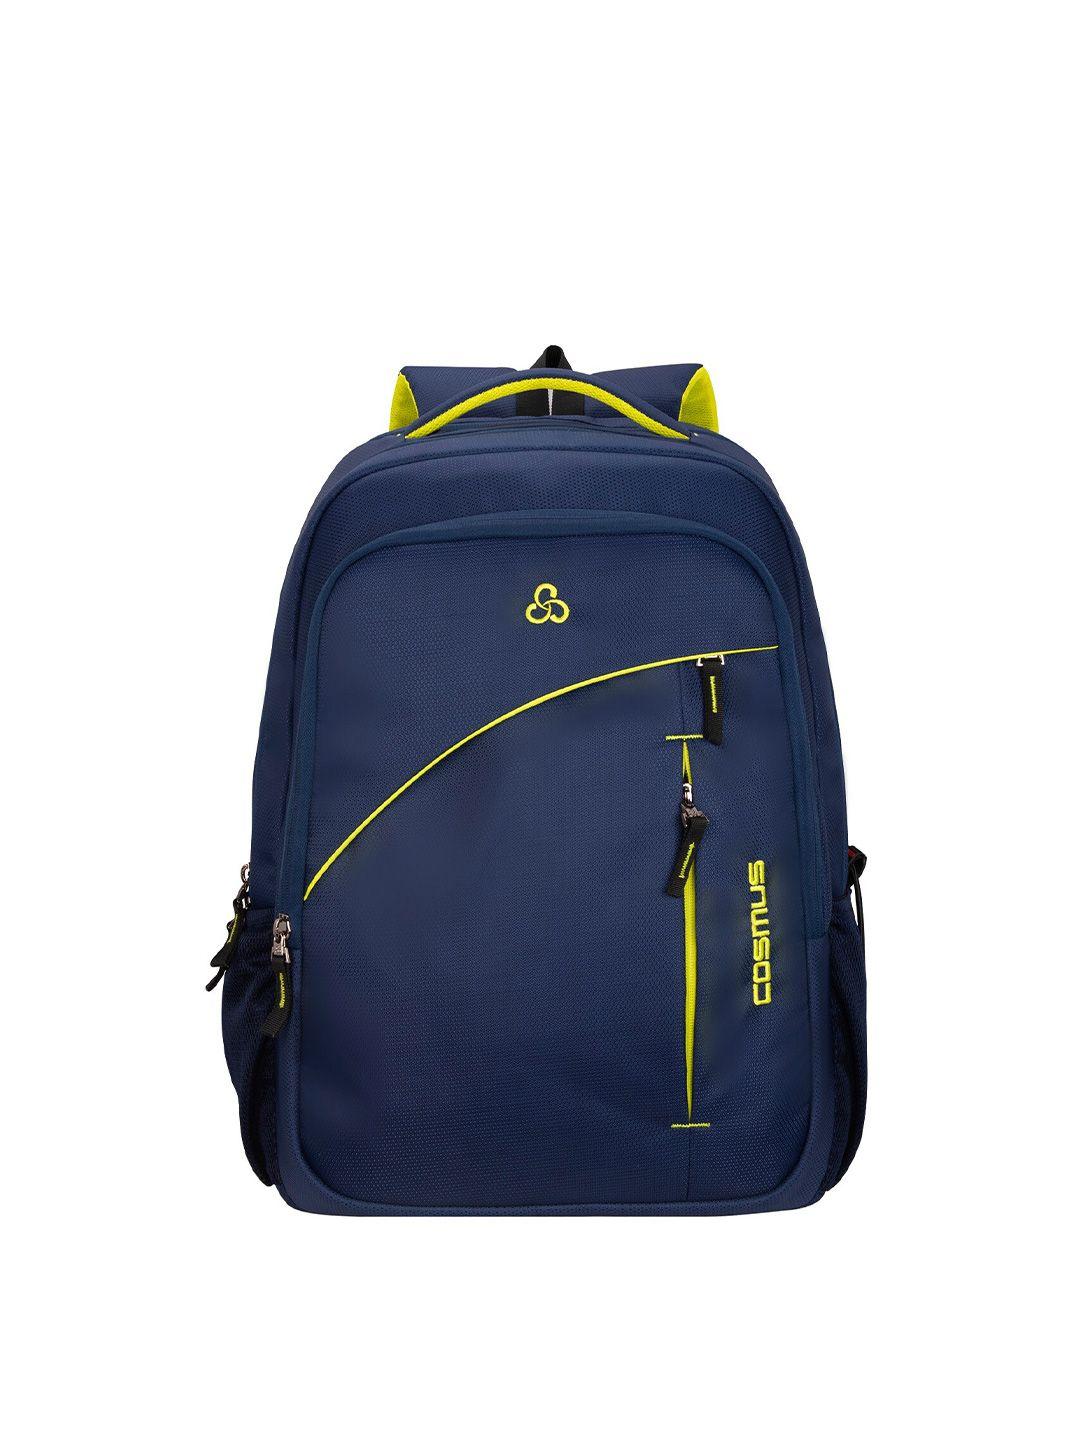 cosmus adult blue & yellow laptop bag